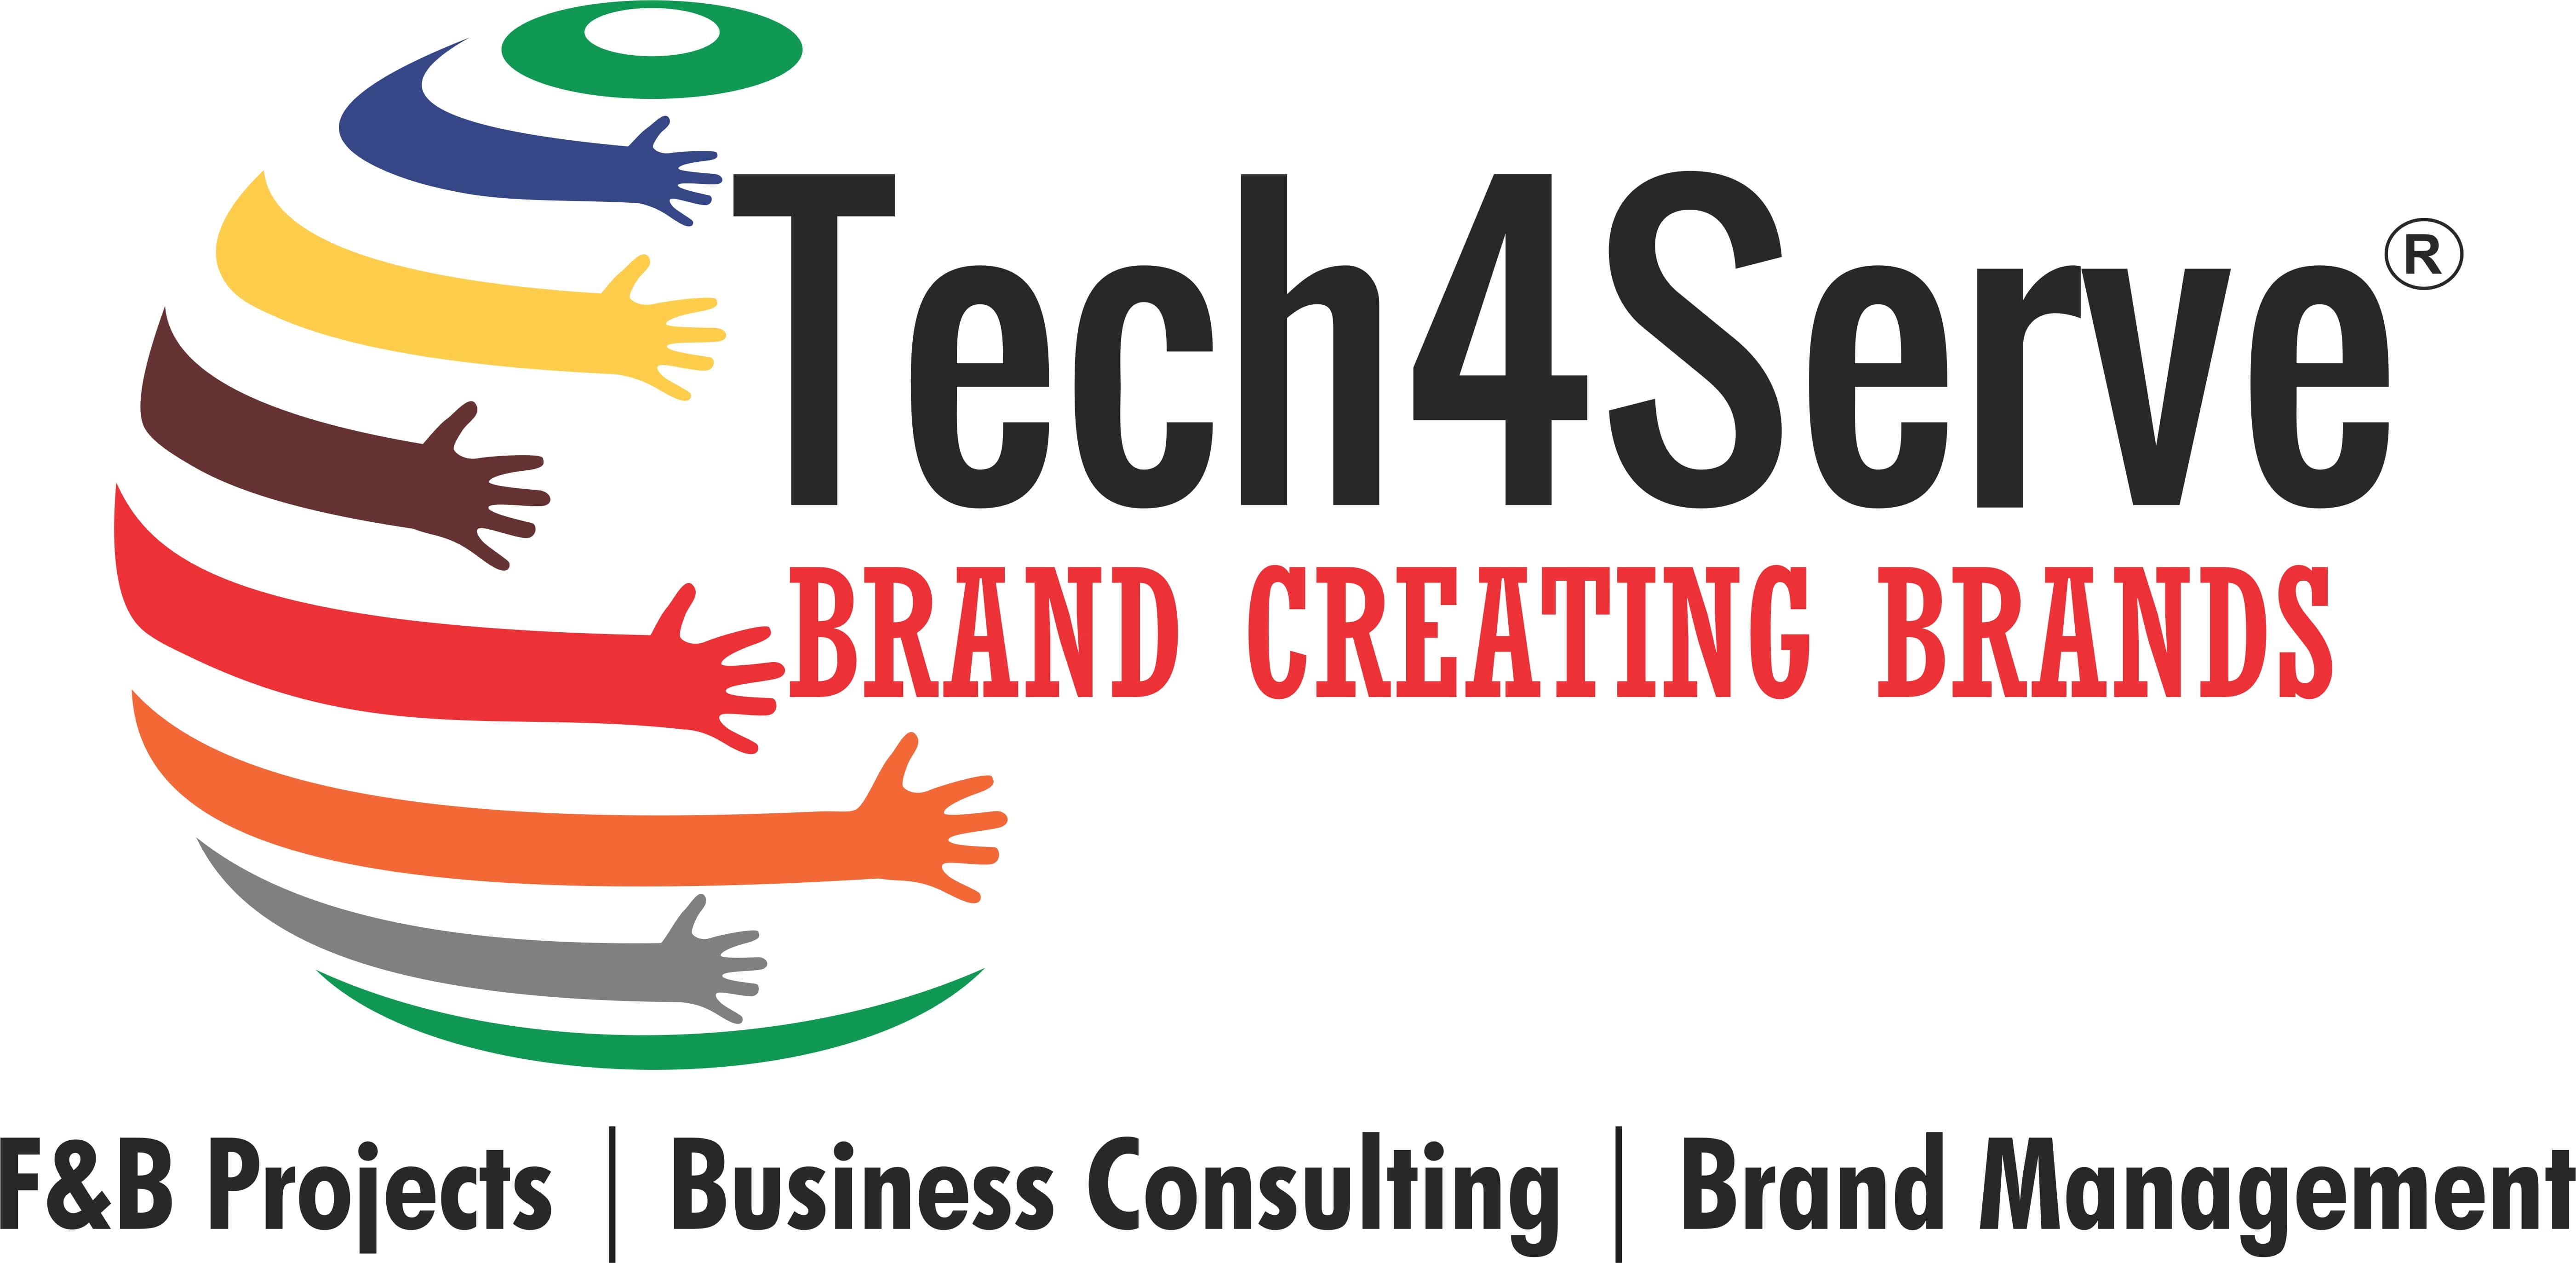 Tech4Serve Brand Creating Brands